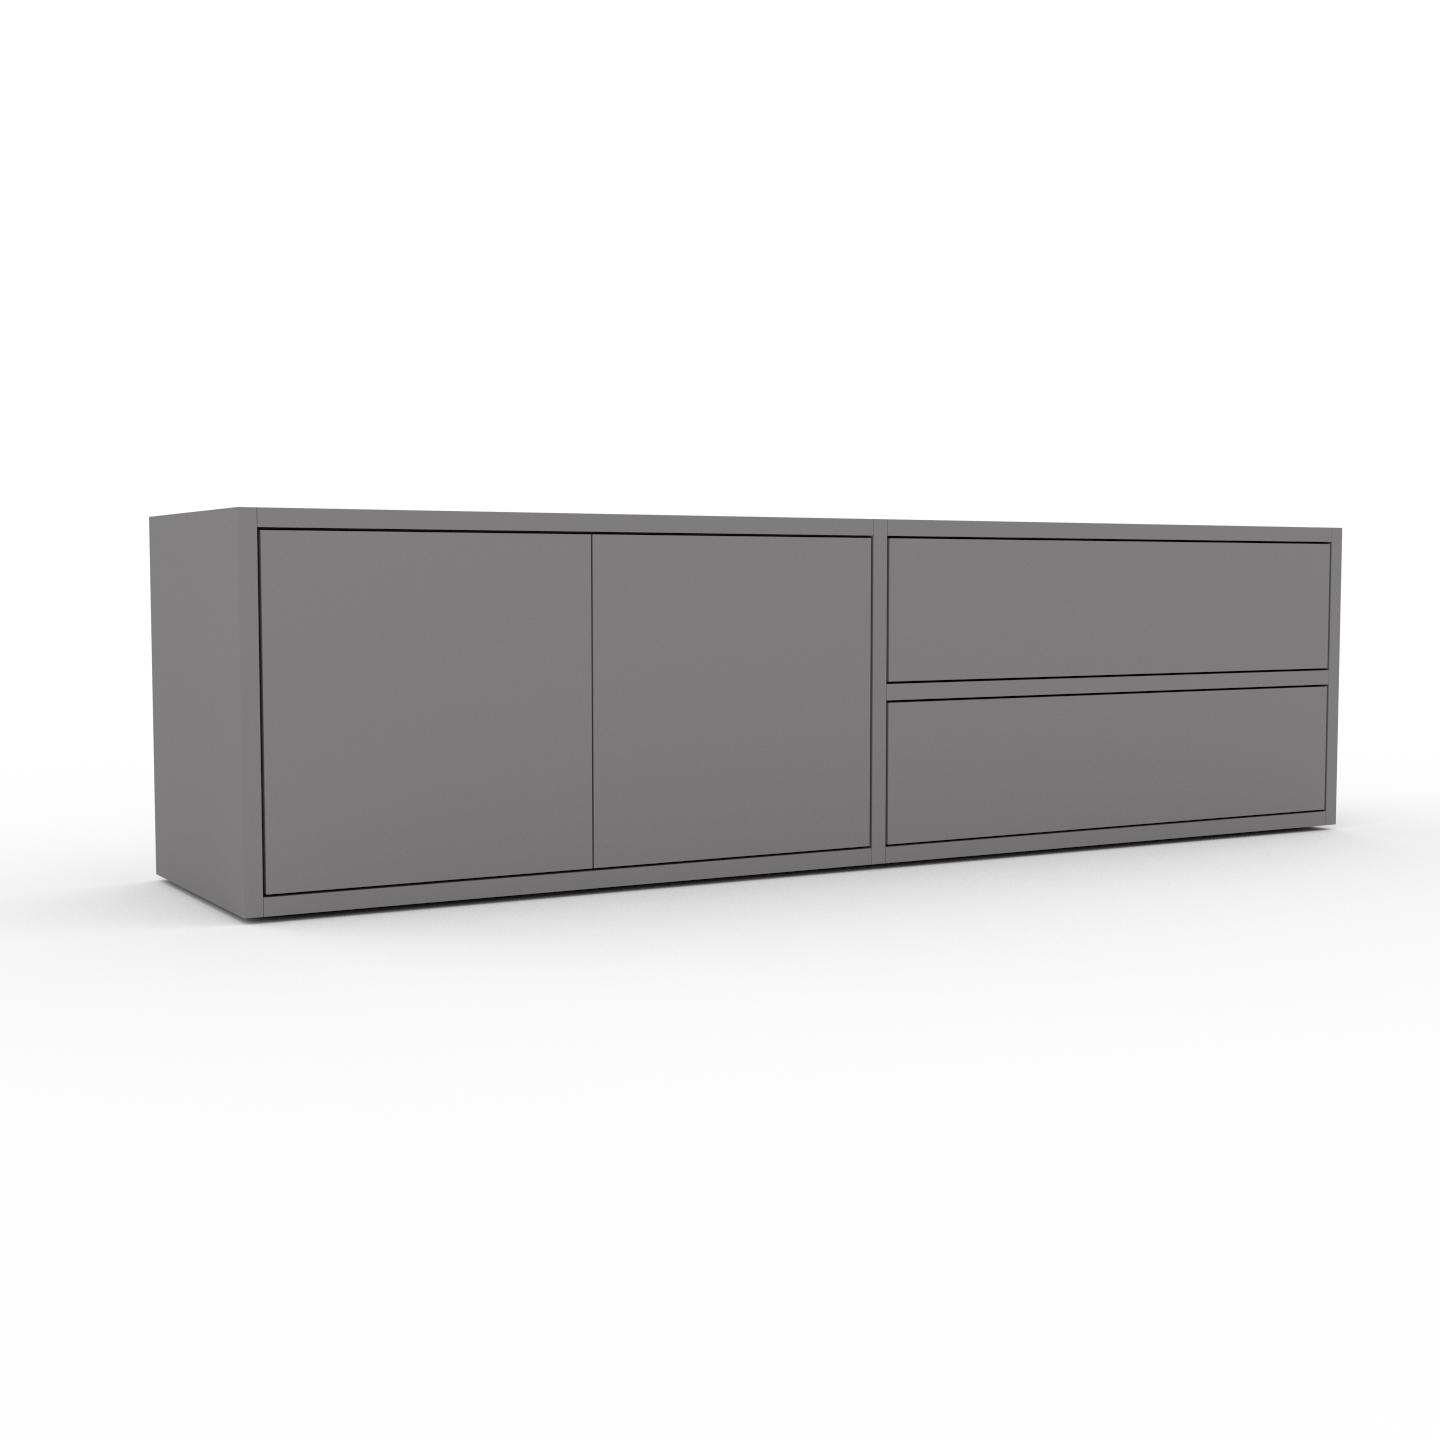 MYCS Lowboard Grau - TV-Board: Schubladen in Grau & Türen in Grau - Hochwertige Materialien - 152 x 41 x 35 cm, Komplett anpassbar